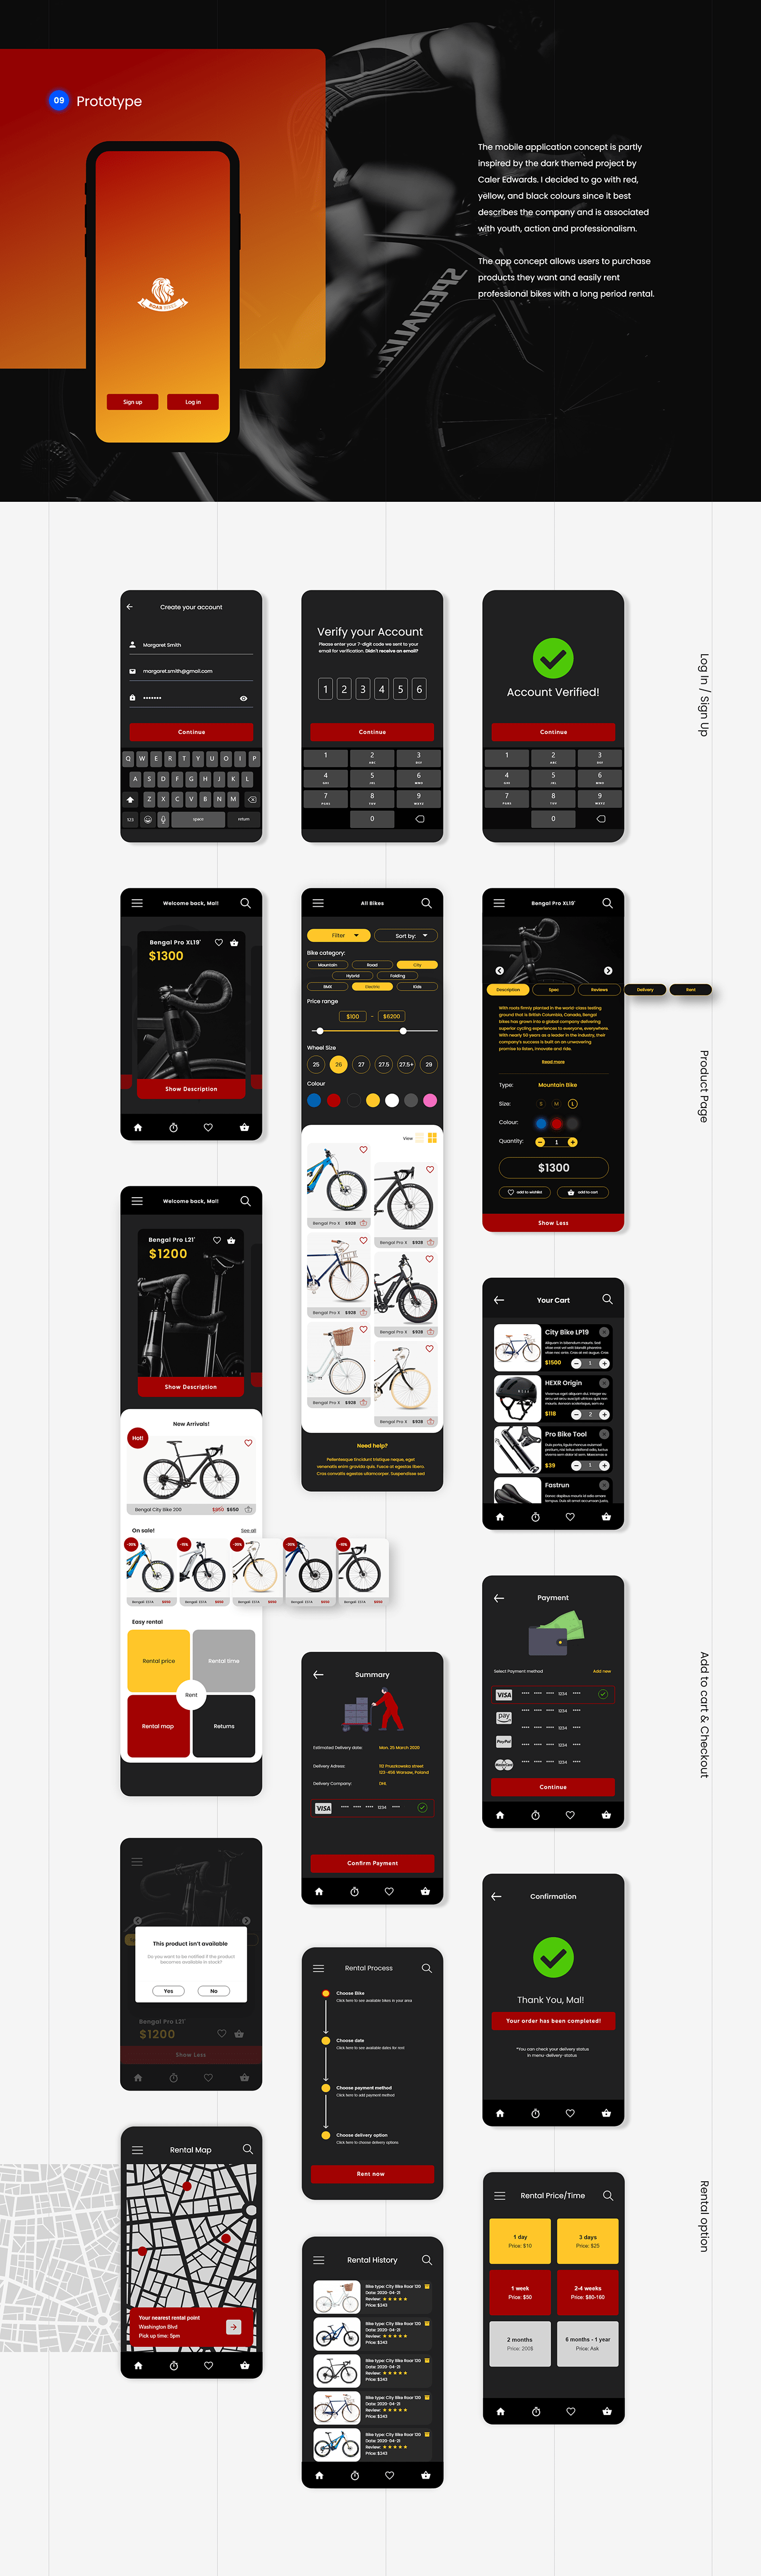 app concept ux/ui Web Webdesign www Bike e-commerce CaseStudy research